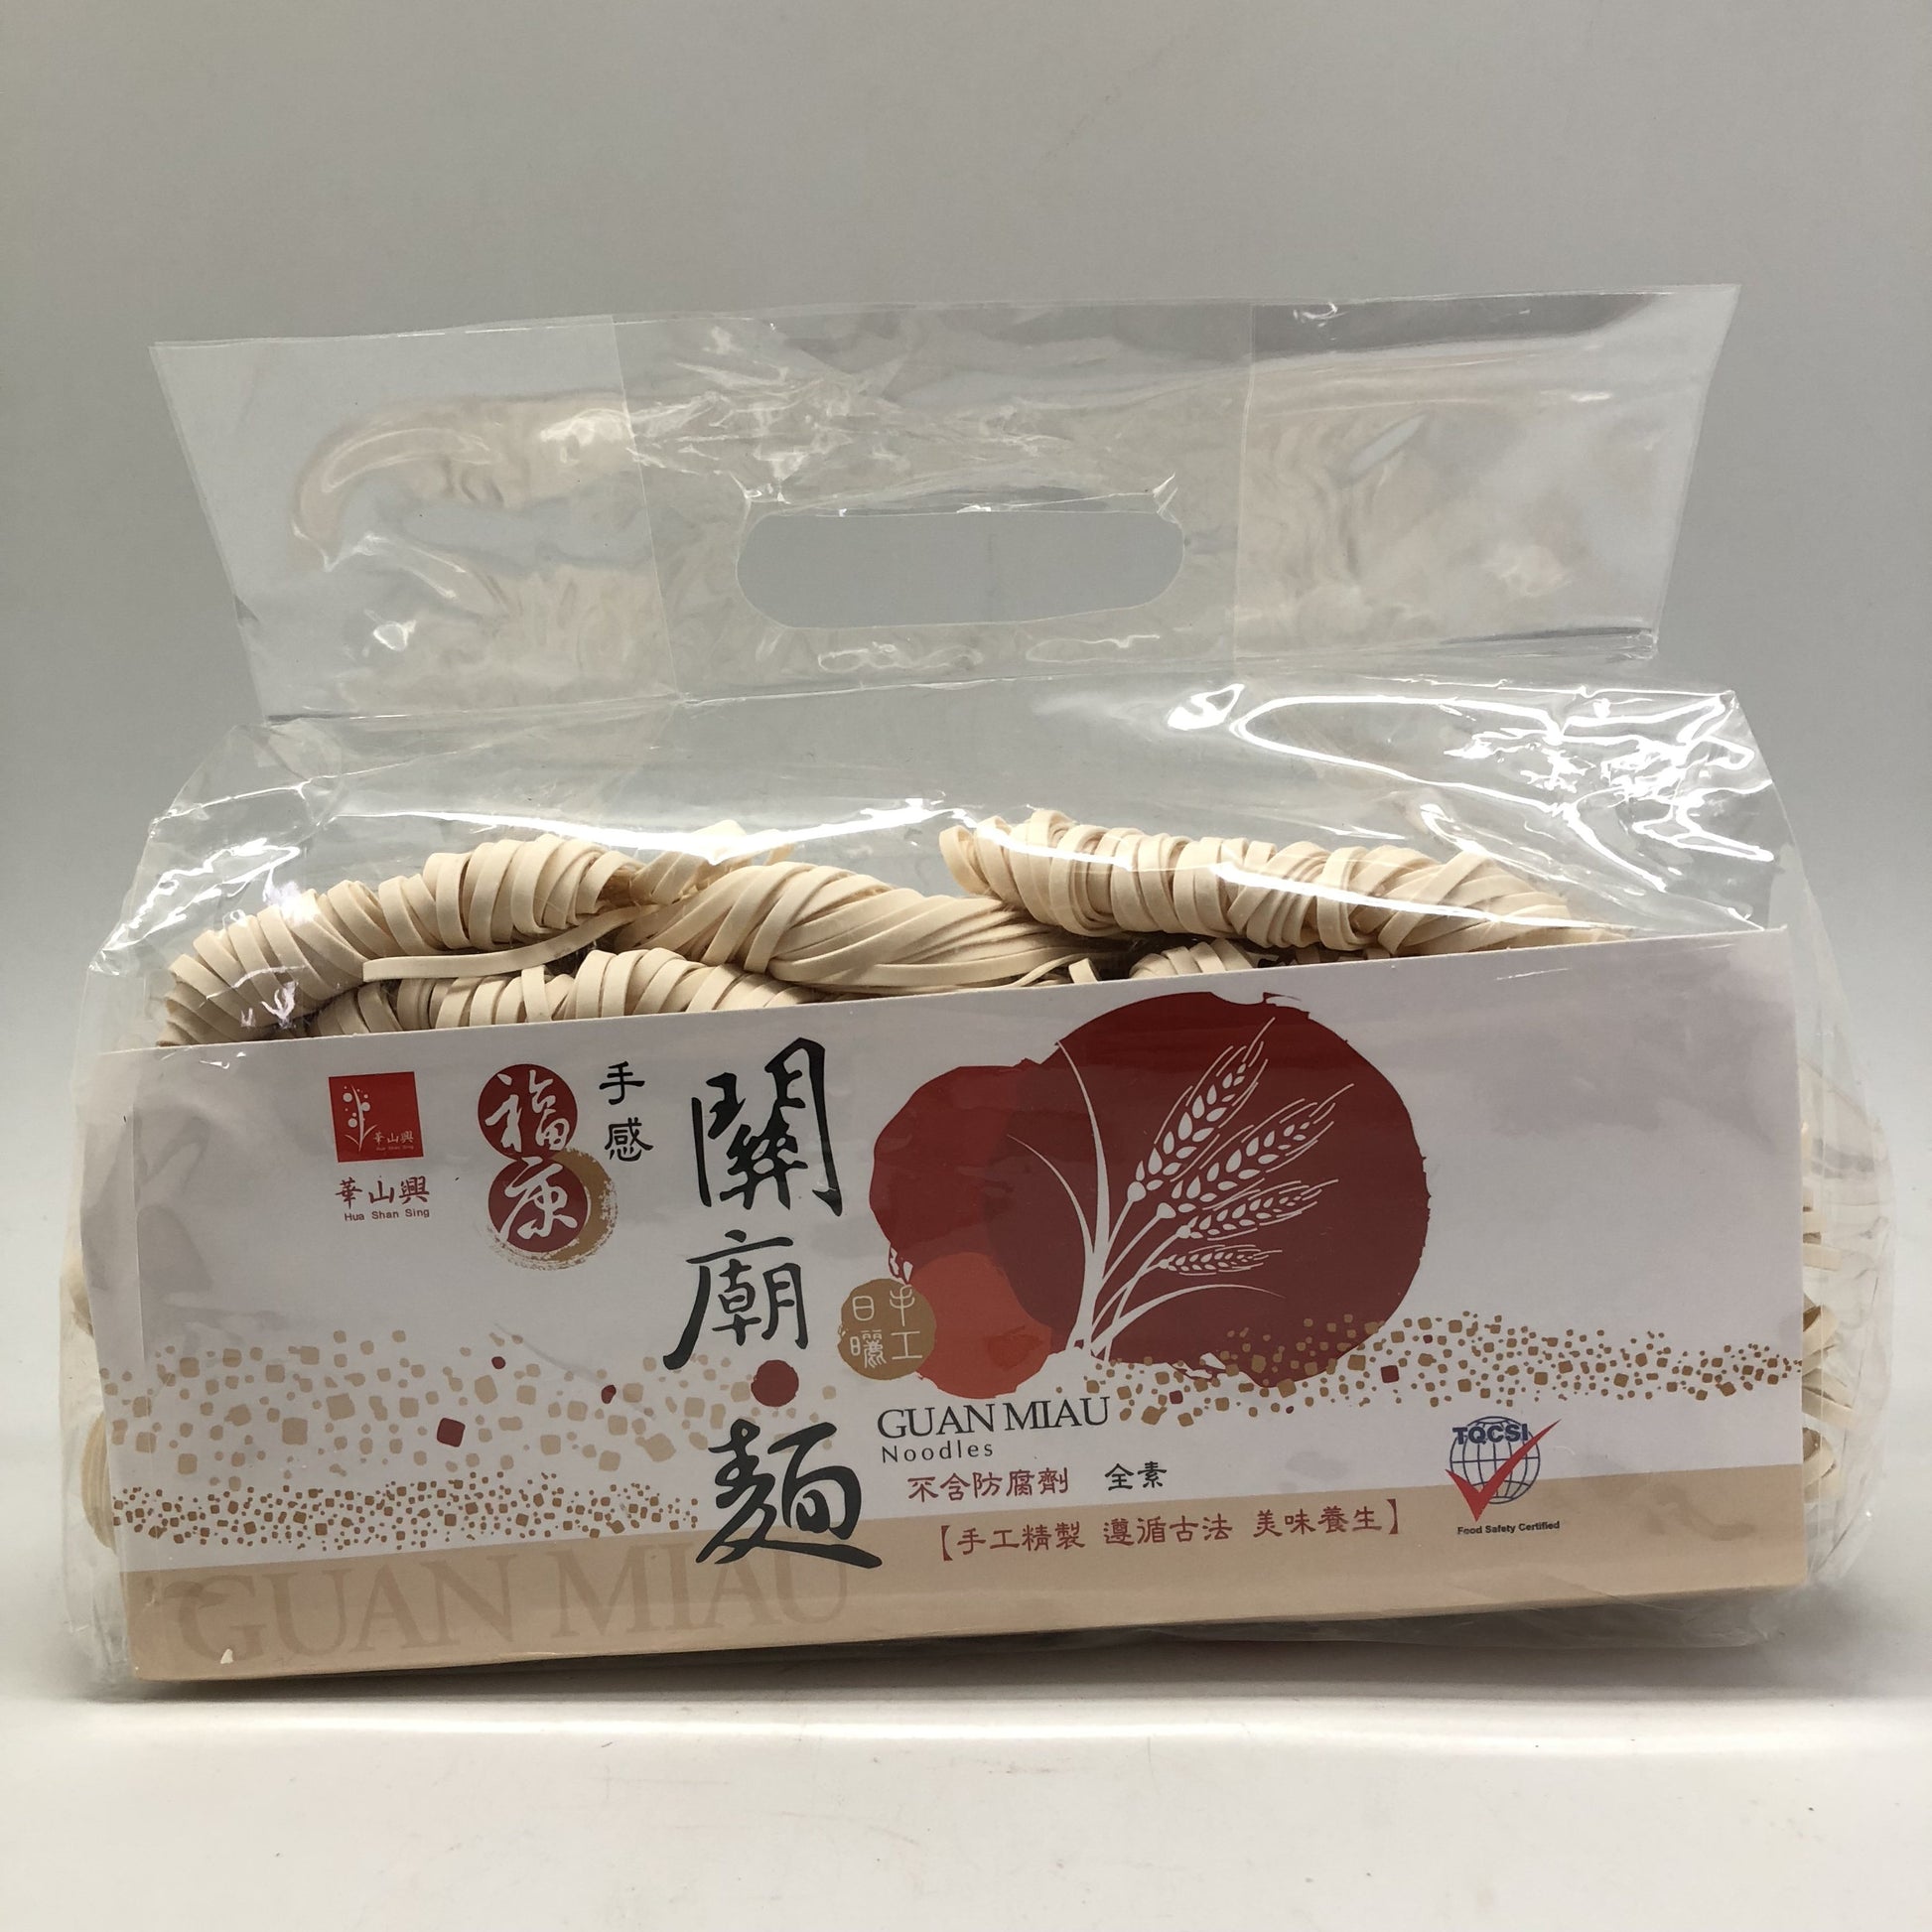 N014TL Hua Shan Sing Brand - Guan Miau Dried Noodles (Large) 1.2kg - 12 bags / 1CTN - New Eastland Pty Ltd - Asian food wholesalers